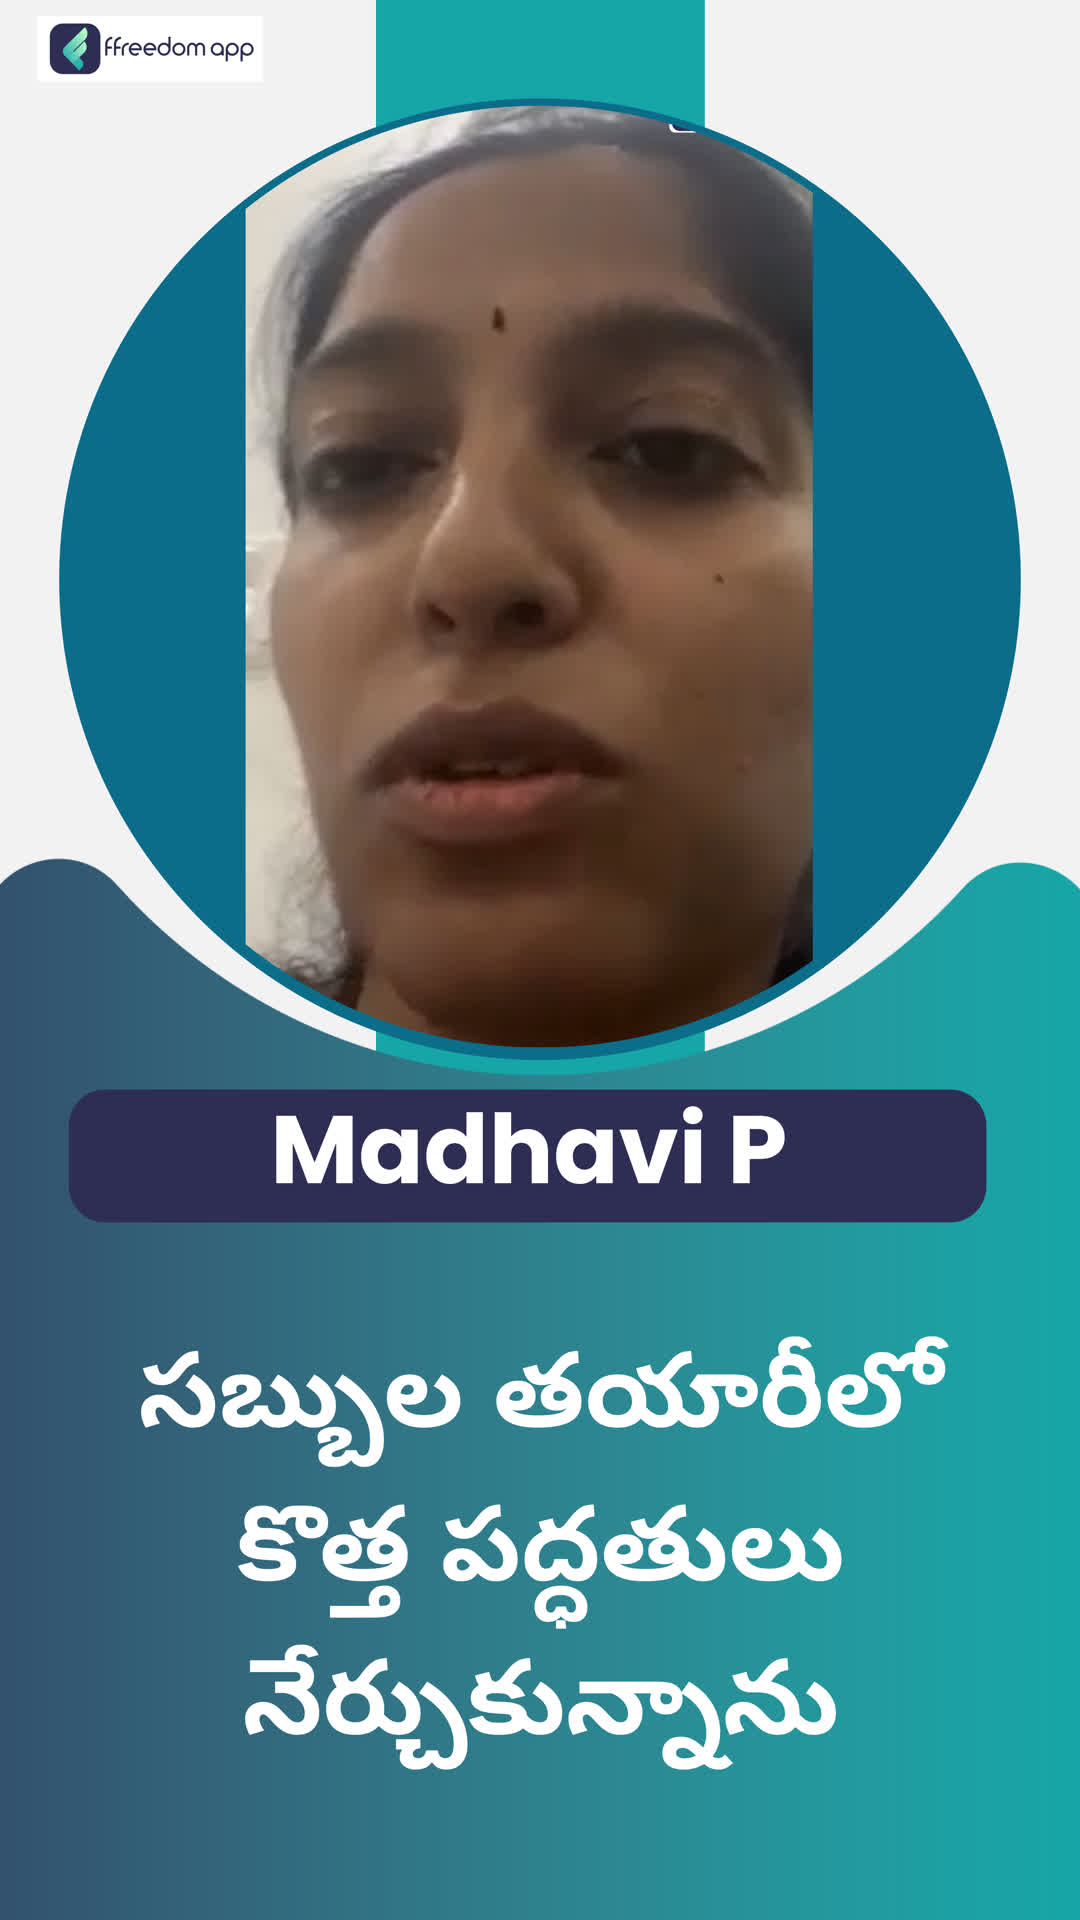 P.Madhavi's Honest Review of ffreedom app - East Godavari ,Andhra Pradesh